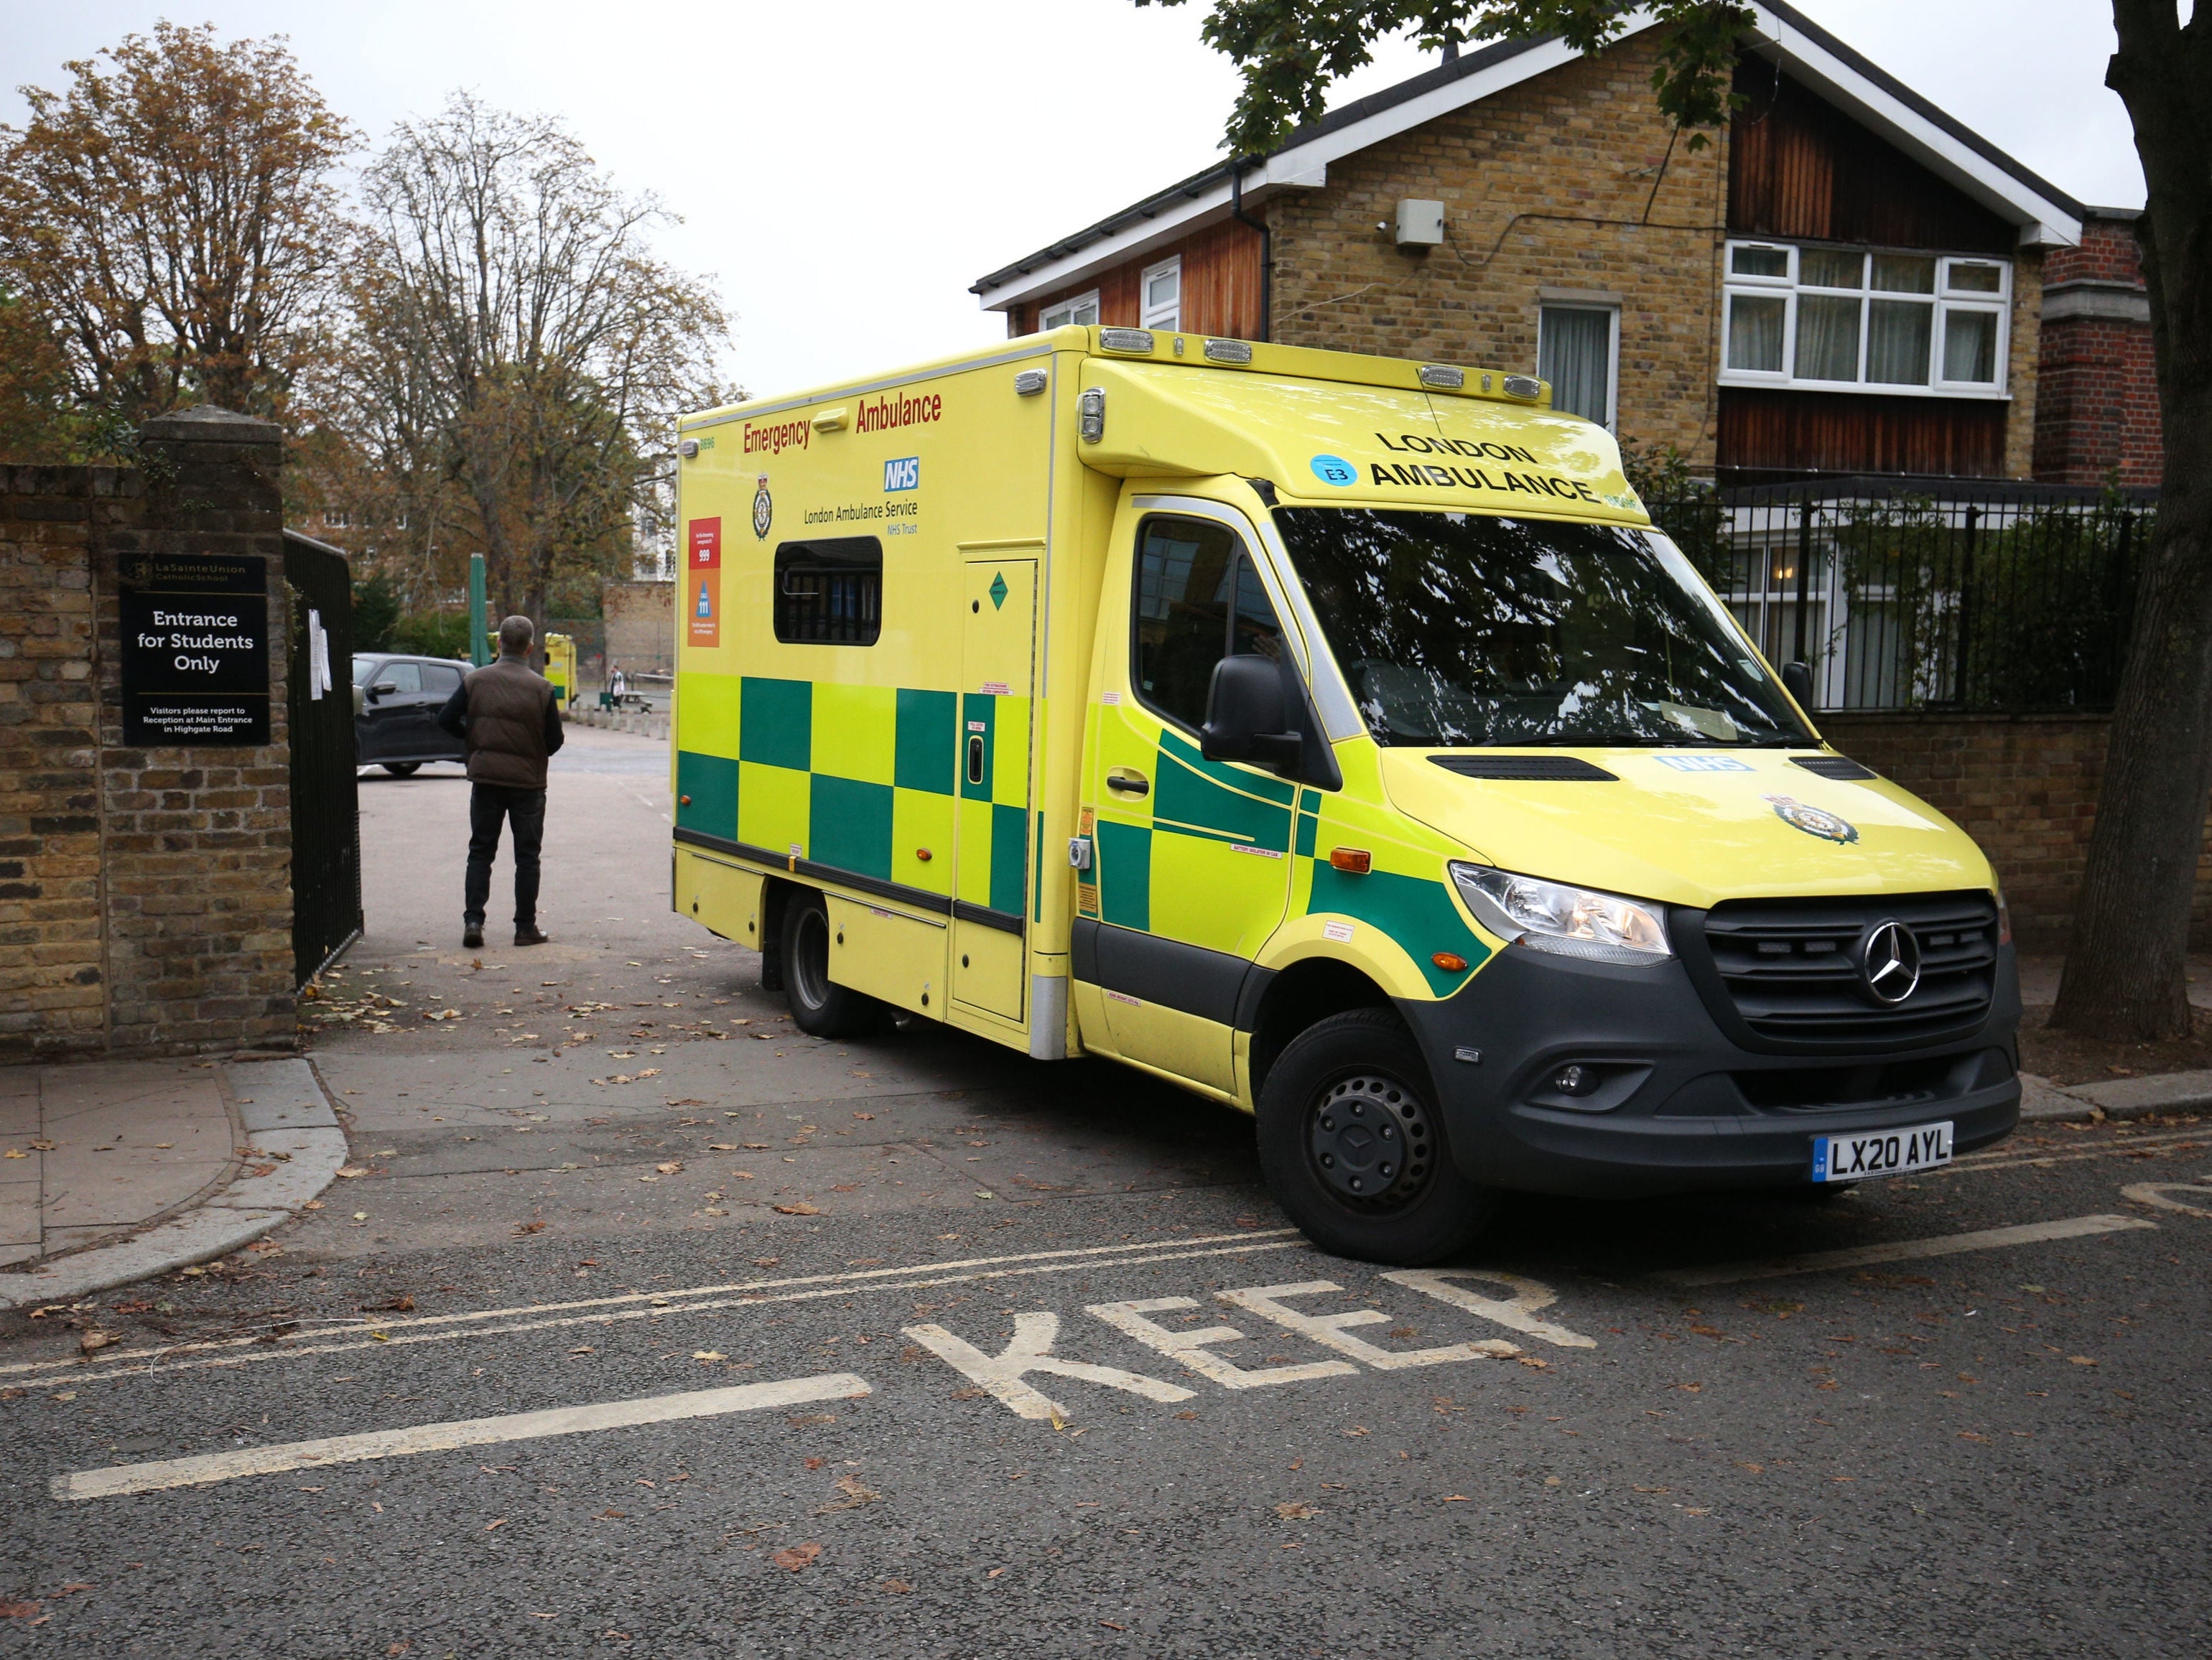 An ambulance leaves La Sainte Union Catholic School in Highgate, north London